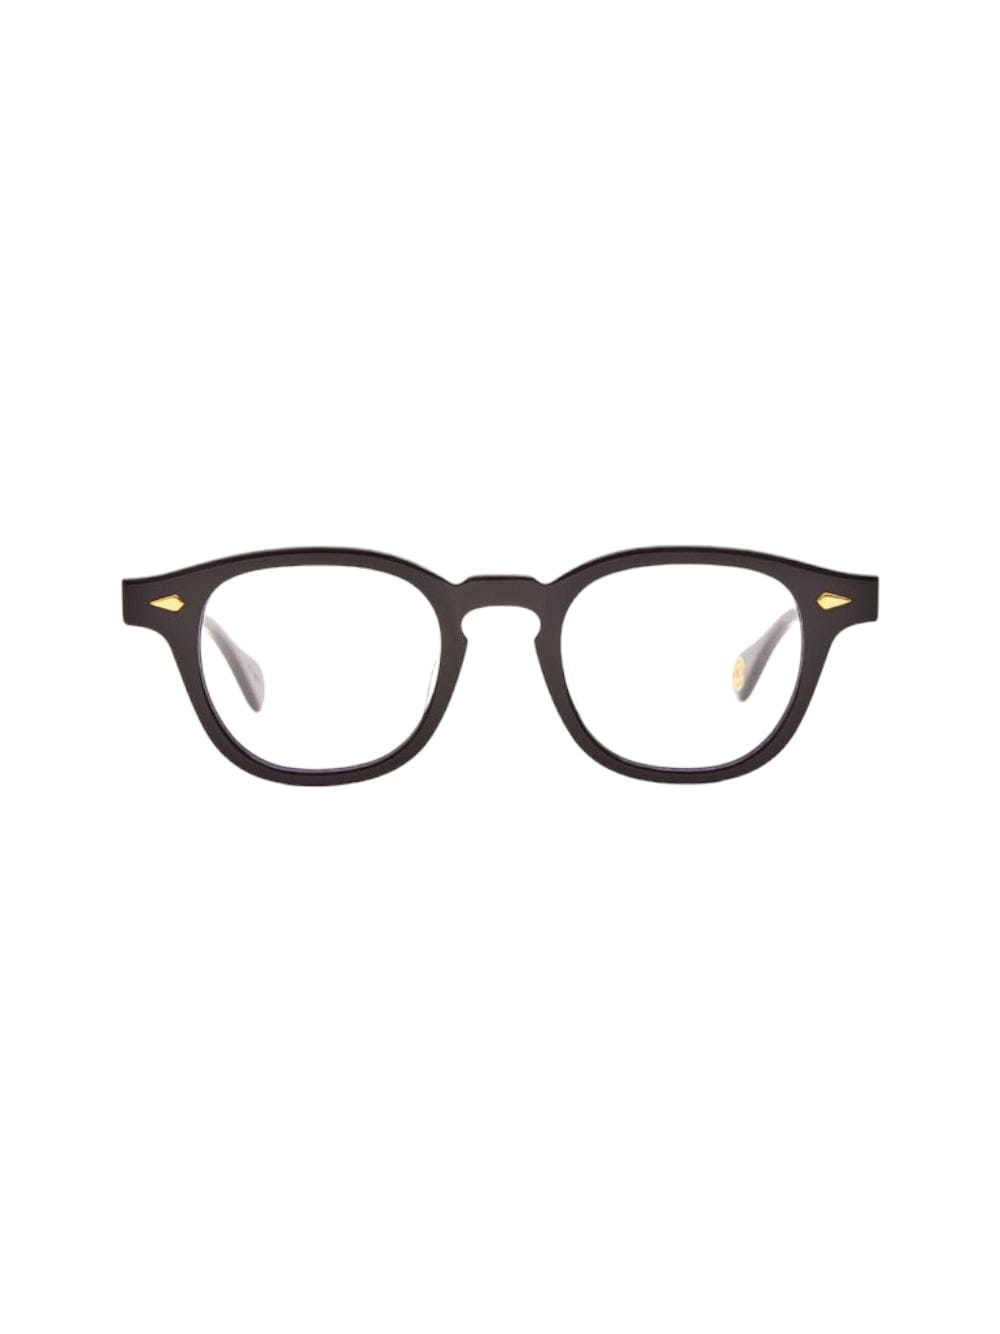 Julius Tart Optical Ar Gold - Limited Edition Glasses In Black